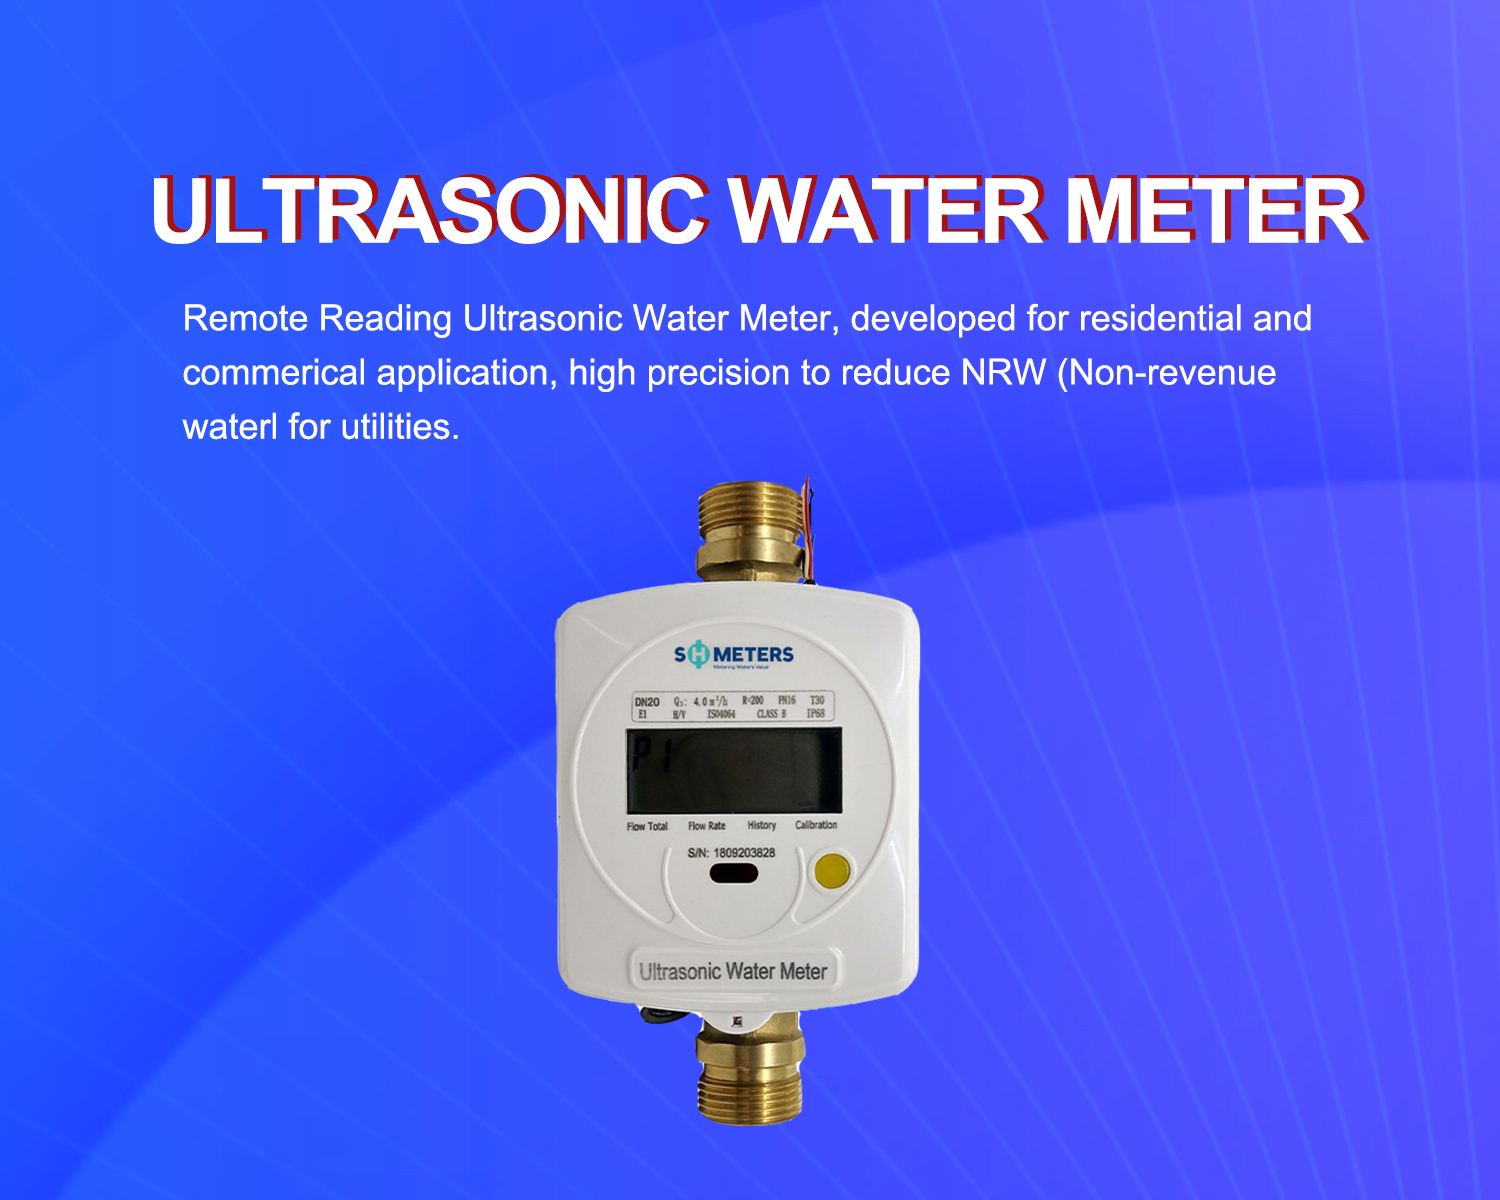 Do you use an ultrasonic water meter?